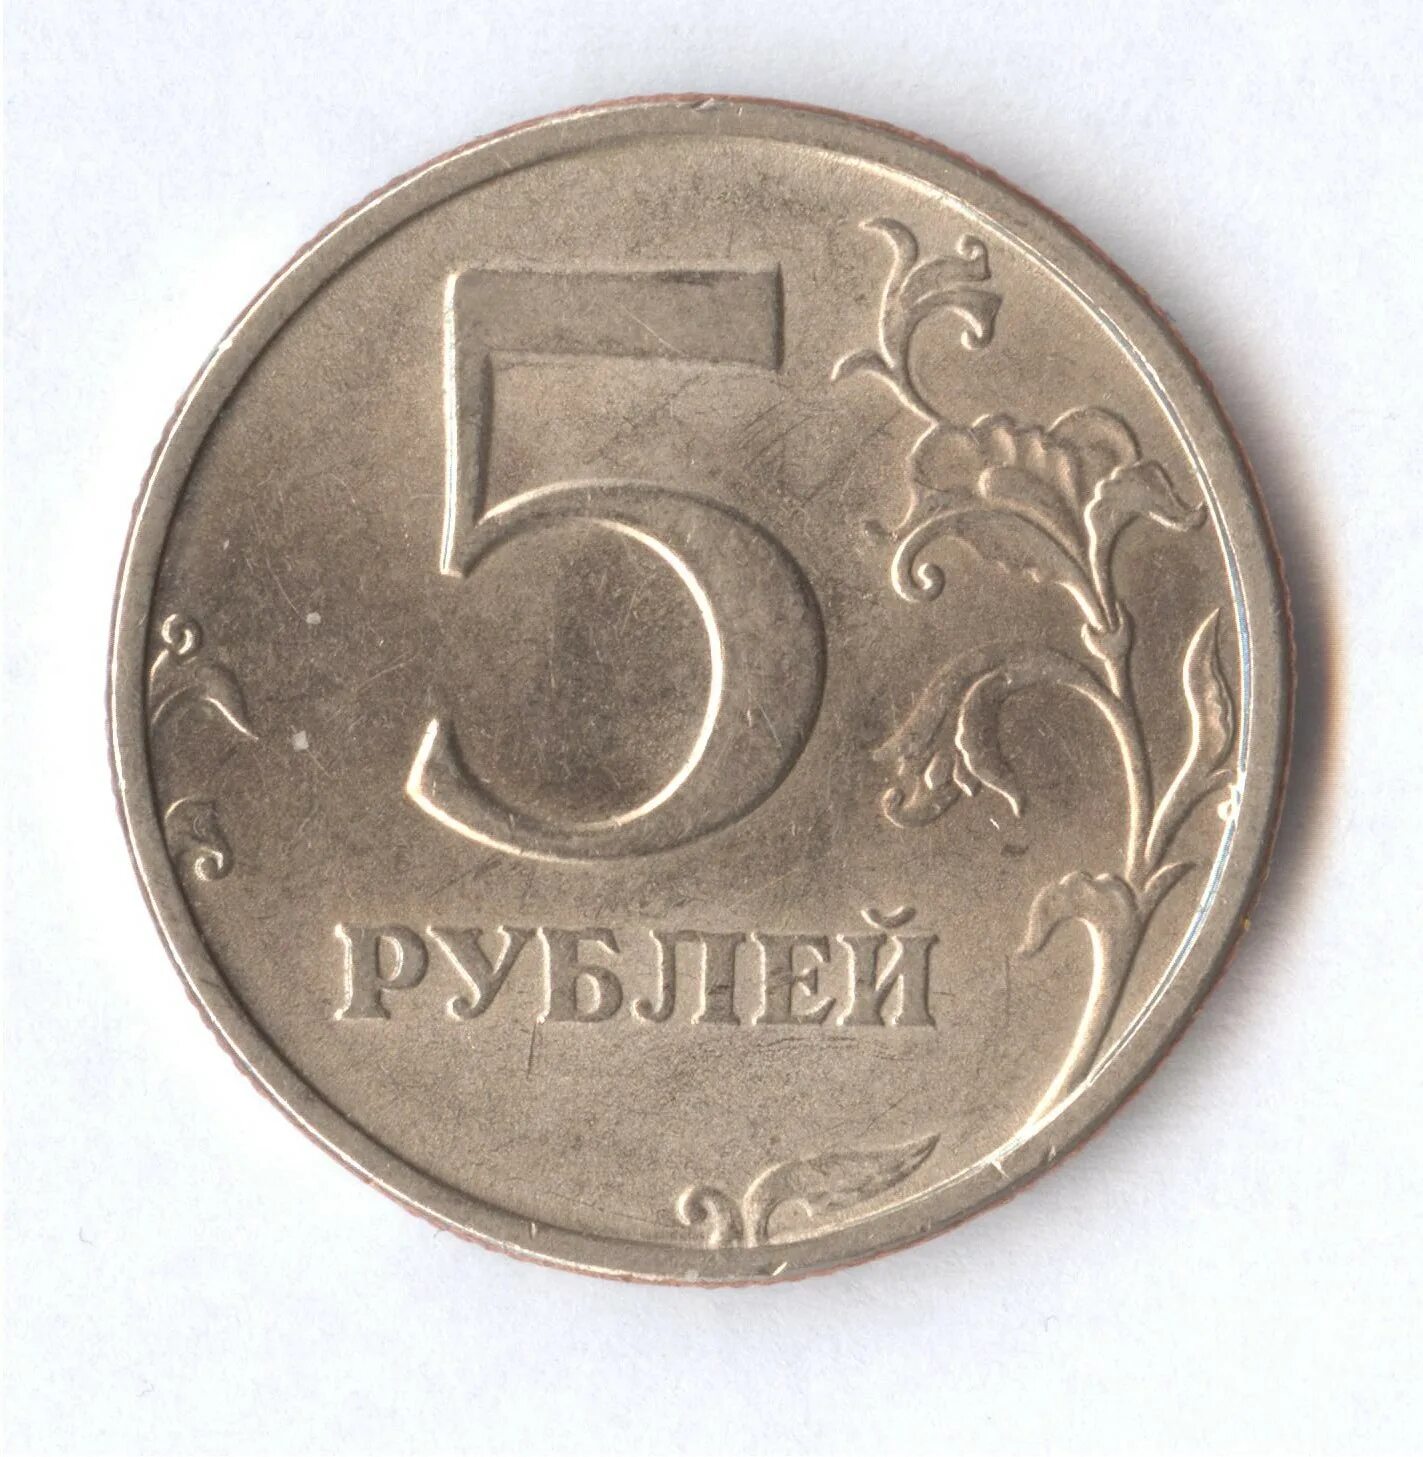 Рубль 5 32. 5 Рублей 1998 СПМД. Дорогие монеты 5 рублей 1998. Монеты СПМД 1998 год 5 рублей. Нумизматика 5 рублей 1998.